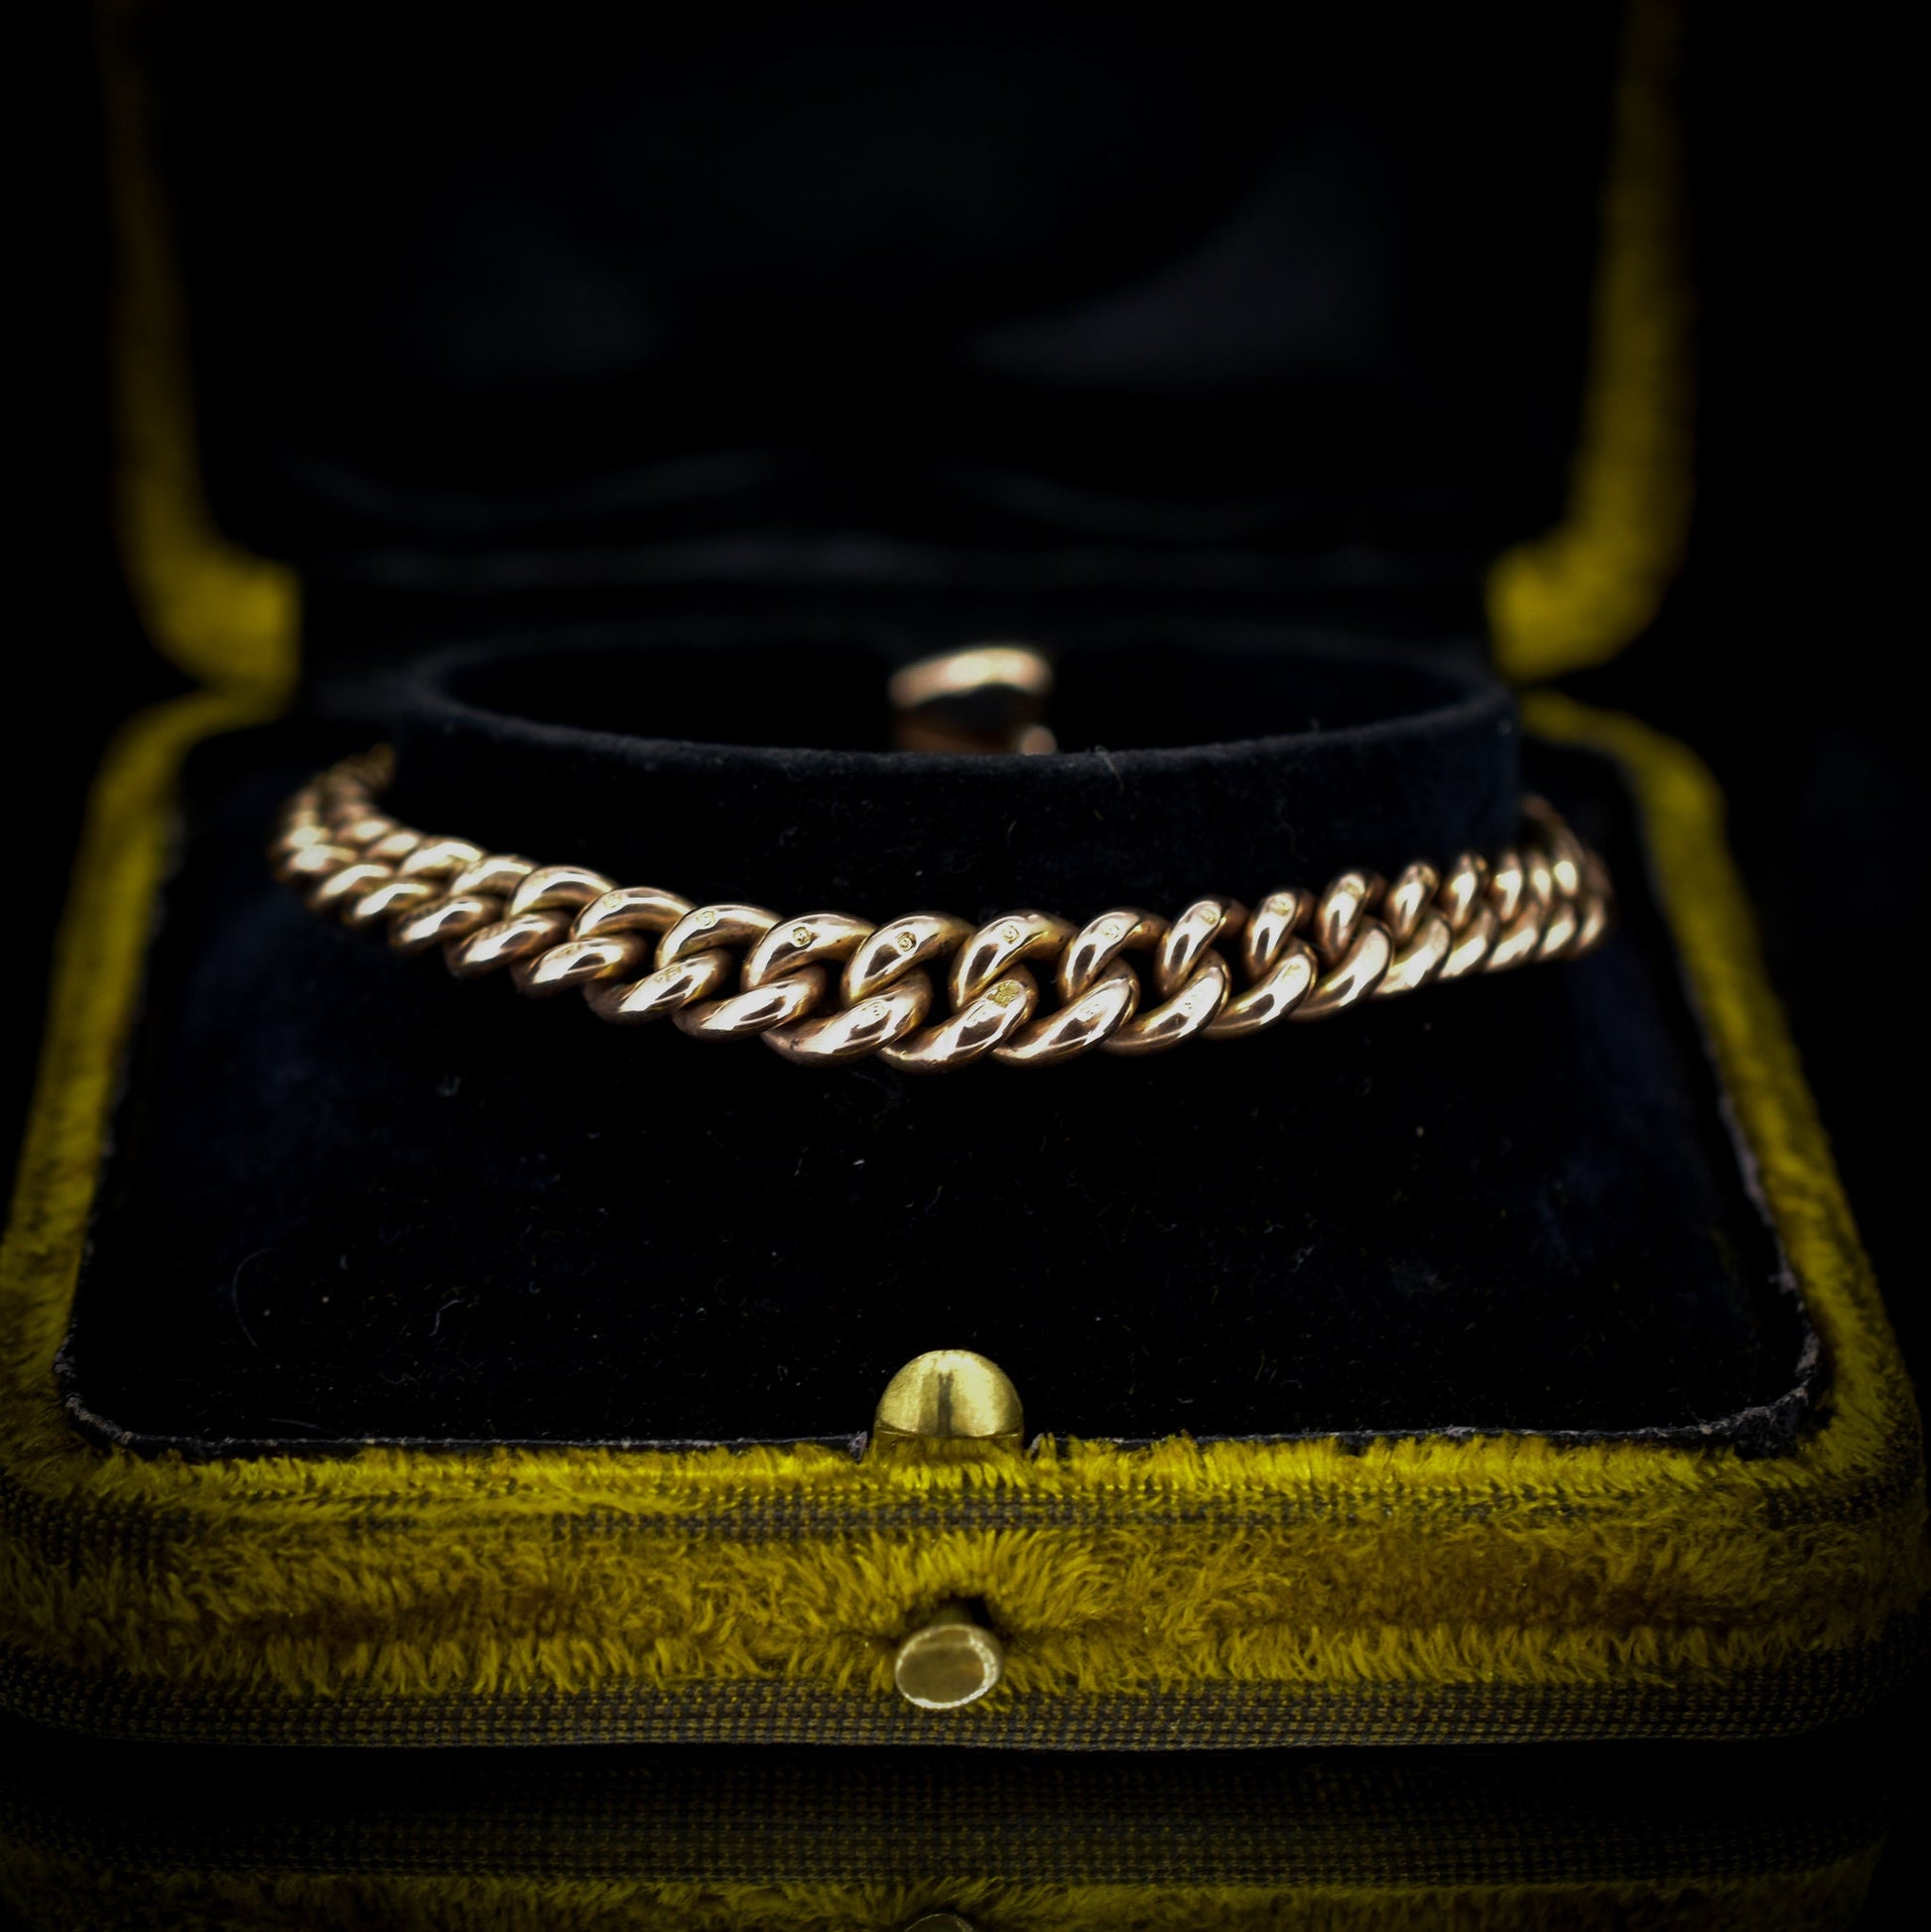 Antique Graduated Curb 9ct 9K Gold Bracelet with Dog Clip Fastener | 7"